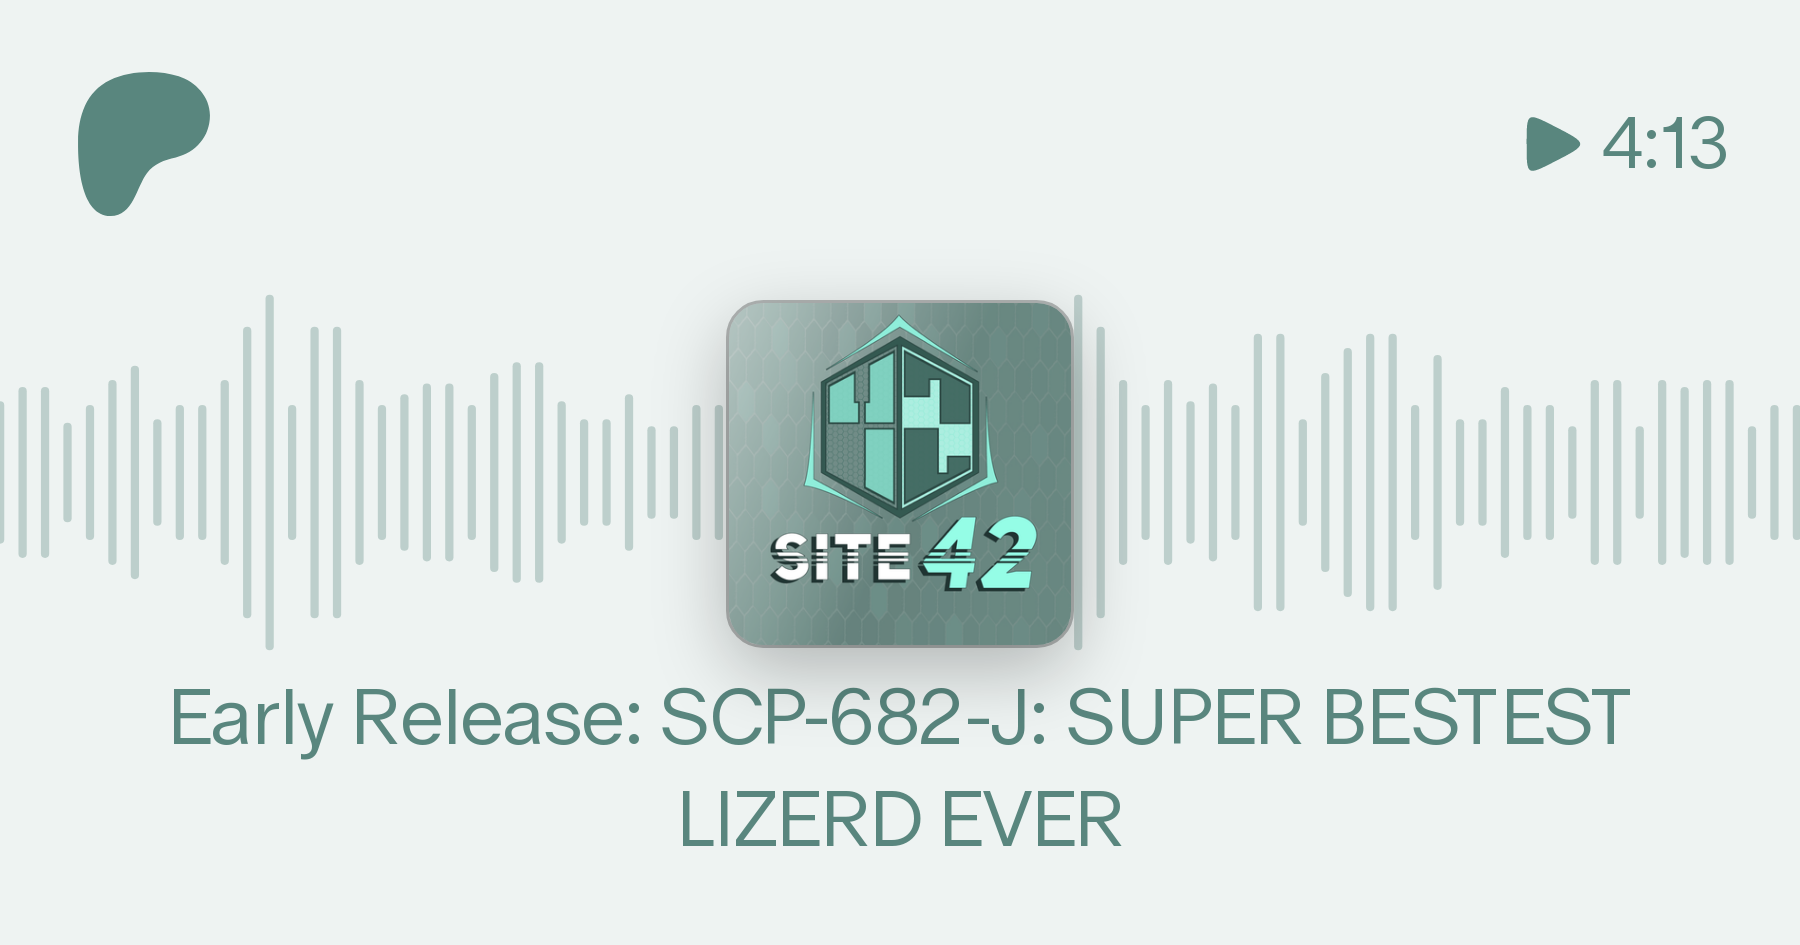 SCP-682-J SUPER BESTEST LIZERD EVER 